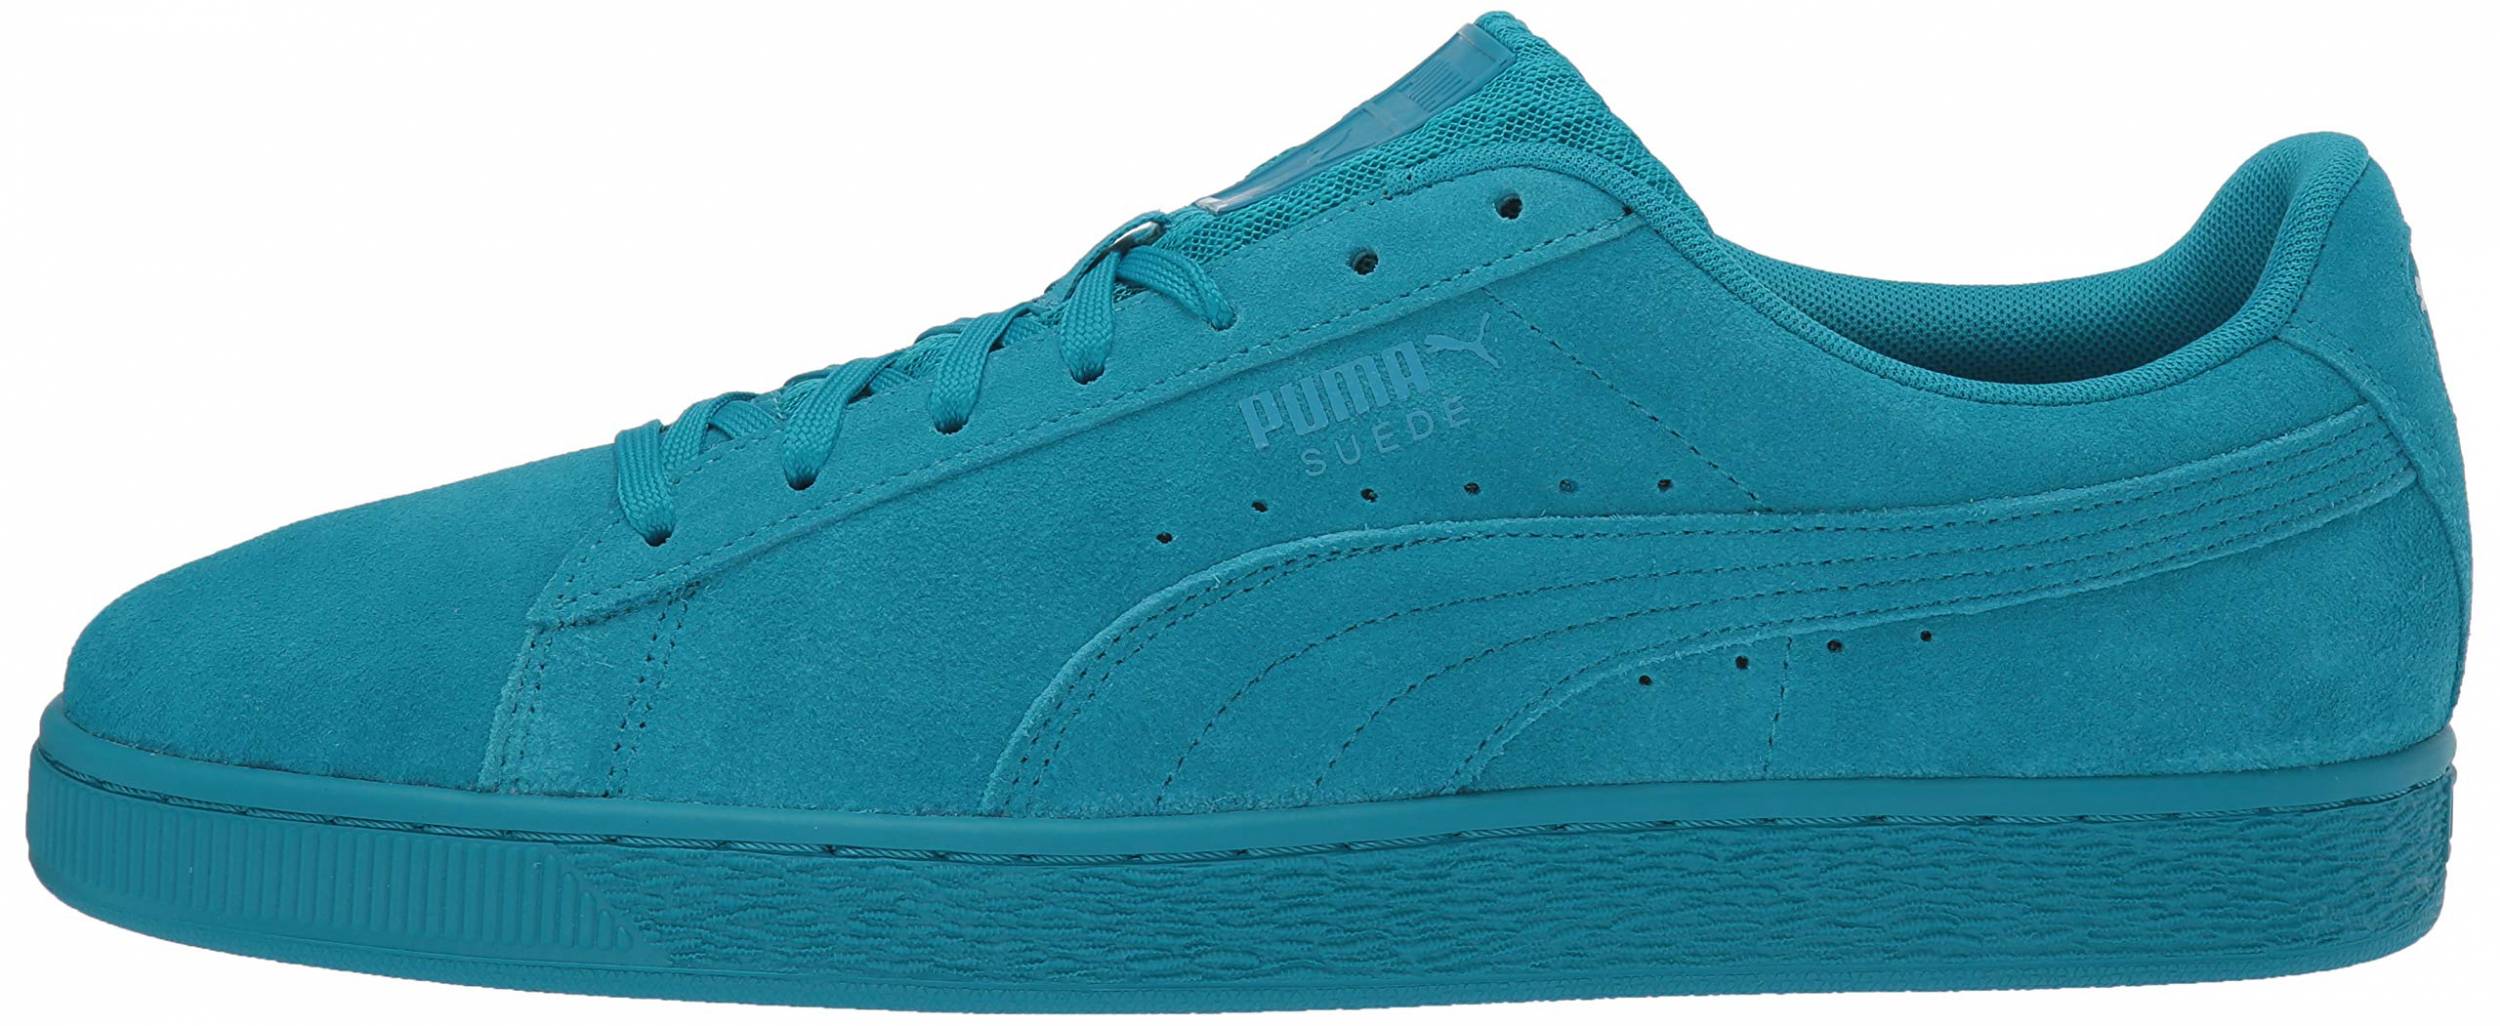 turquoise puma shoes